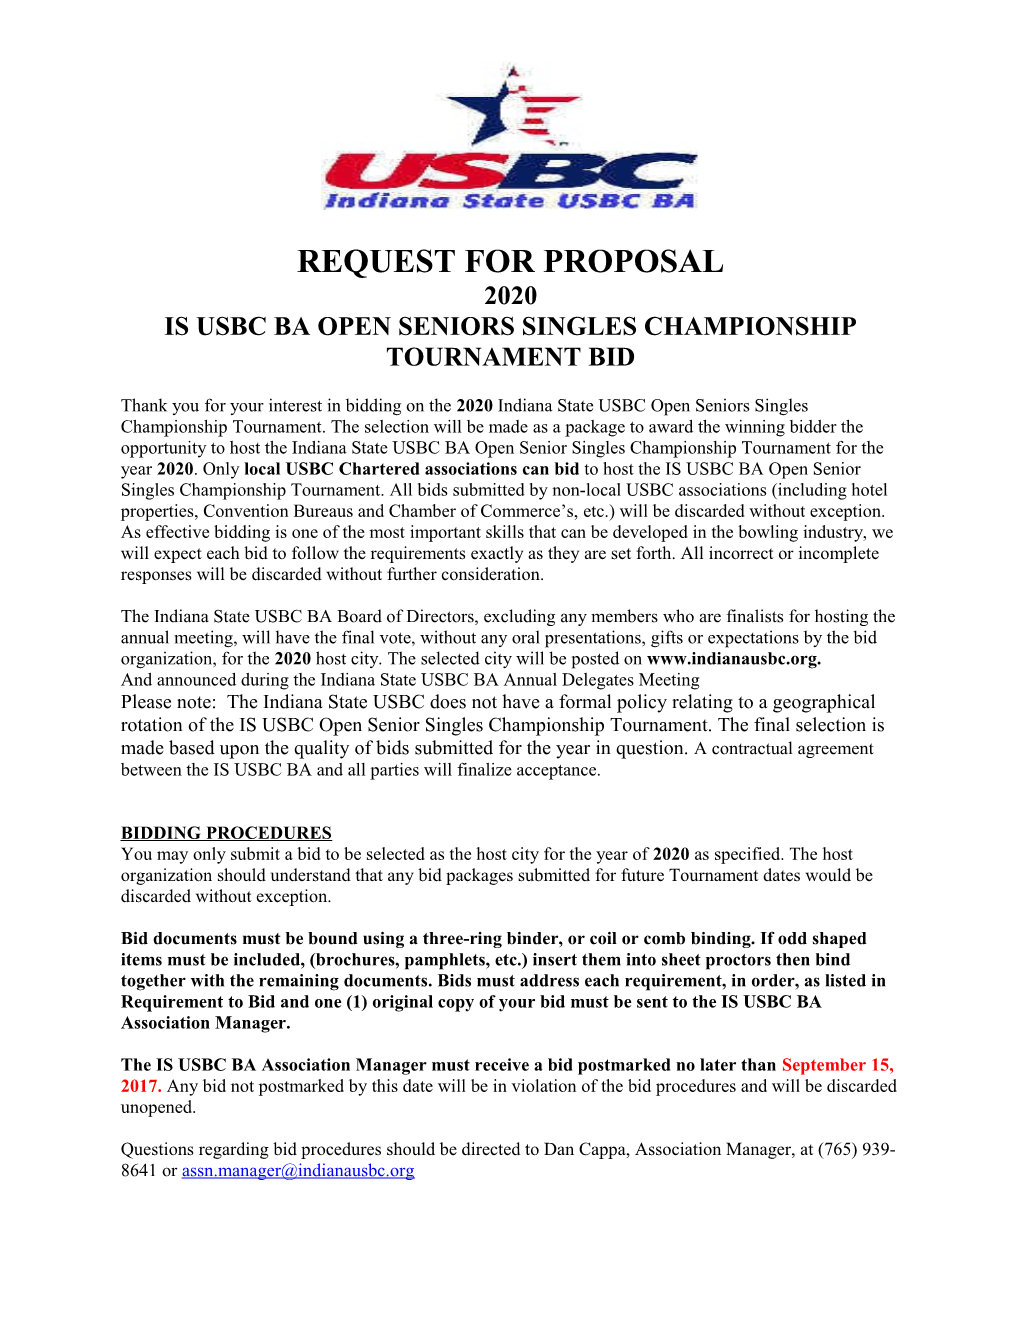 Is Usbc Ba Open Seniors Singles Championship Tournament Bid